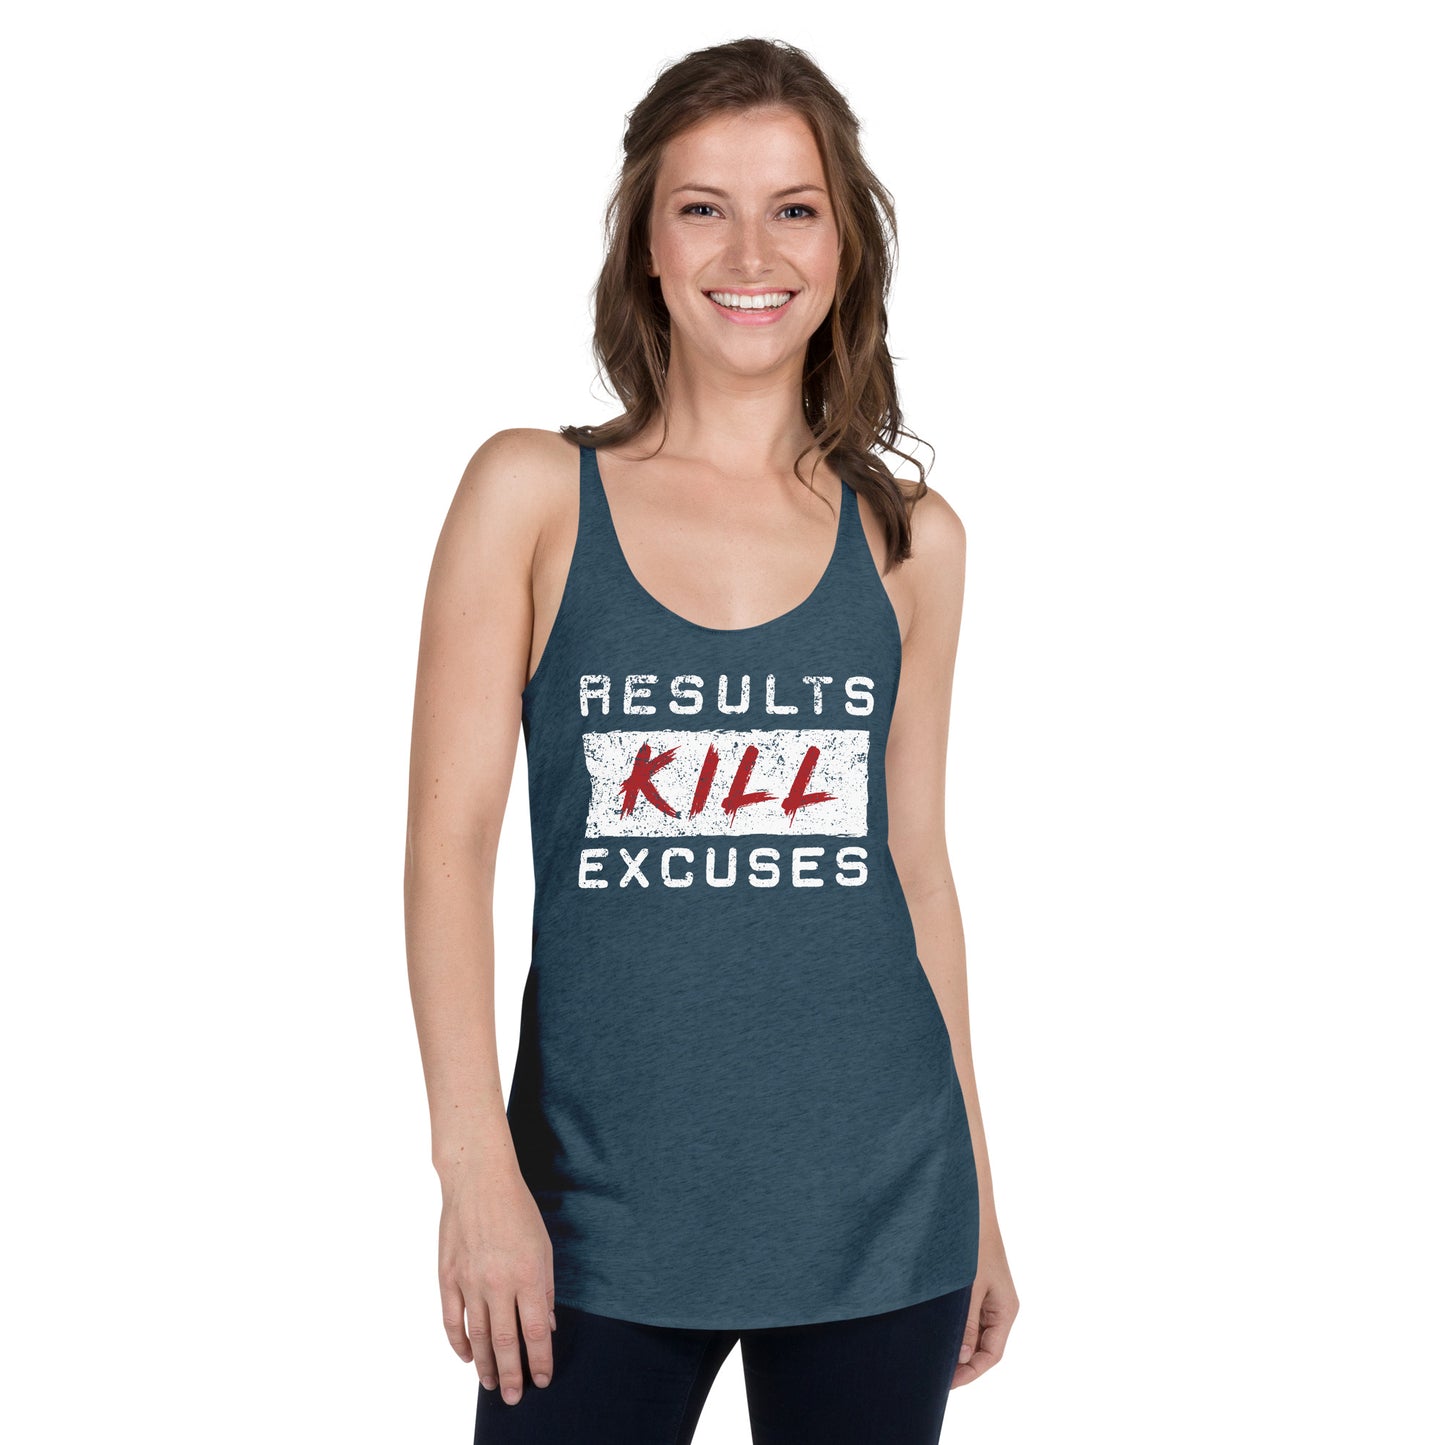 RESULTS KILL EXCUSES Women's Racerback Tank